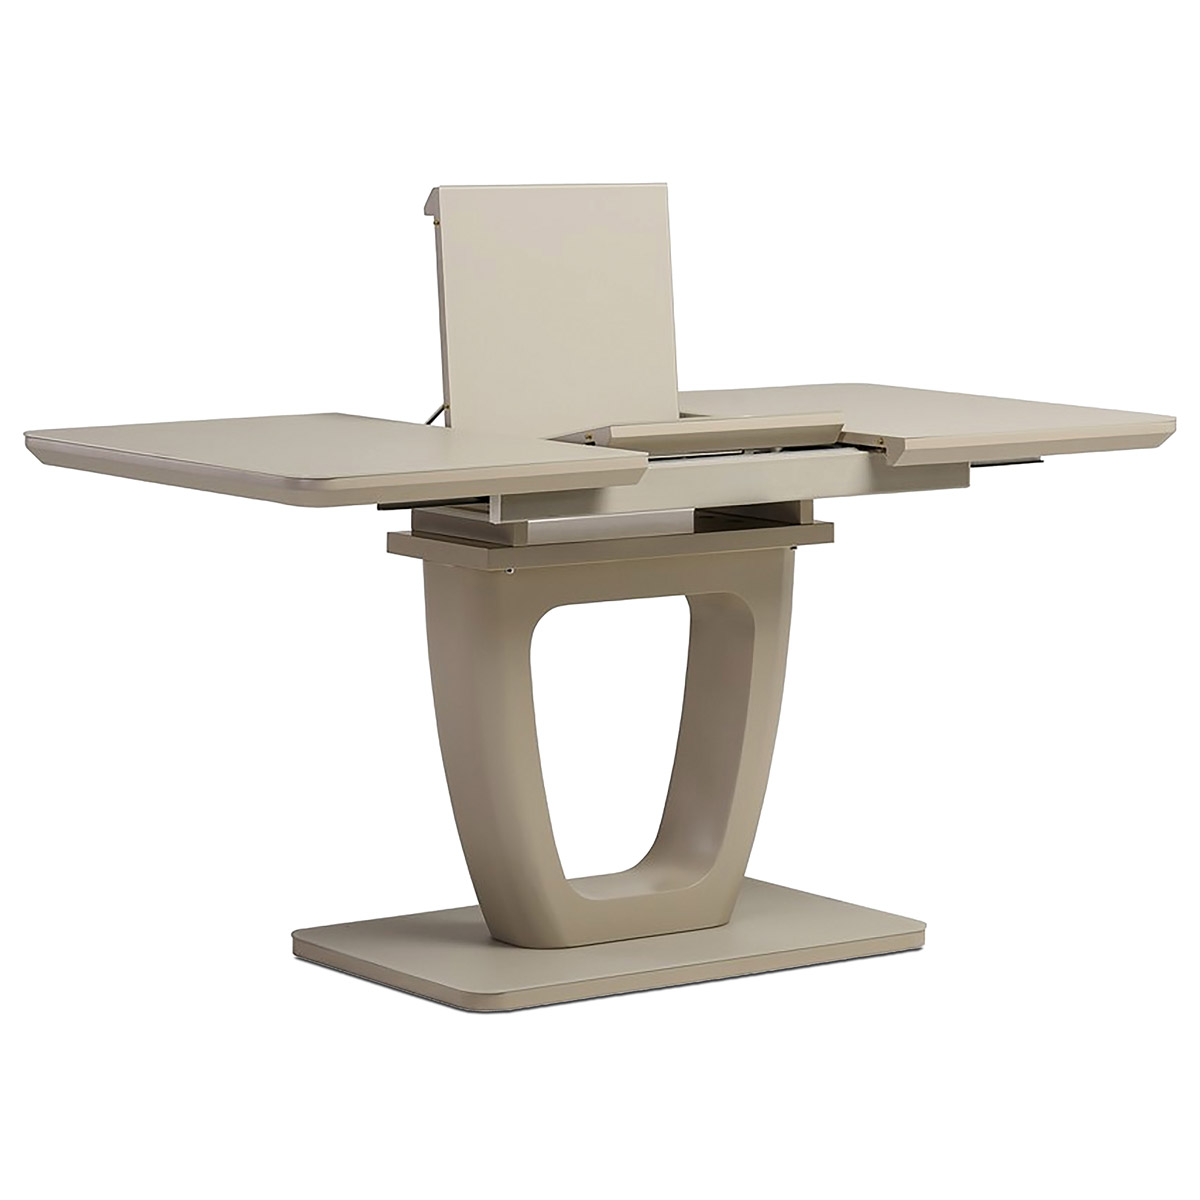 Jedálenský stôl 110+40x75 cm, cappuccino 4 mm sklenená doska, MDF, cappuccino mat